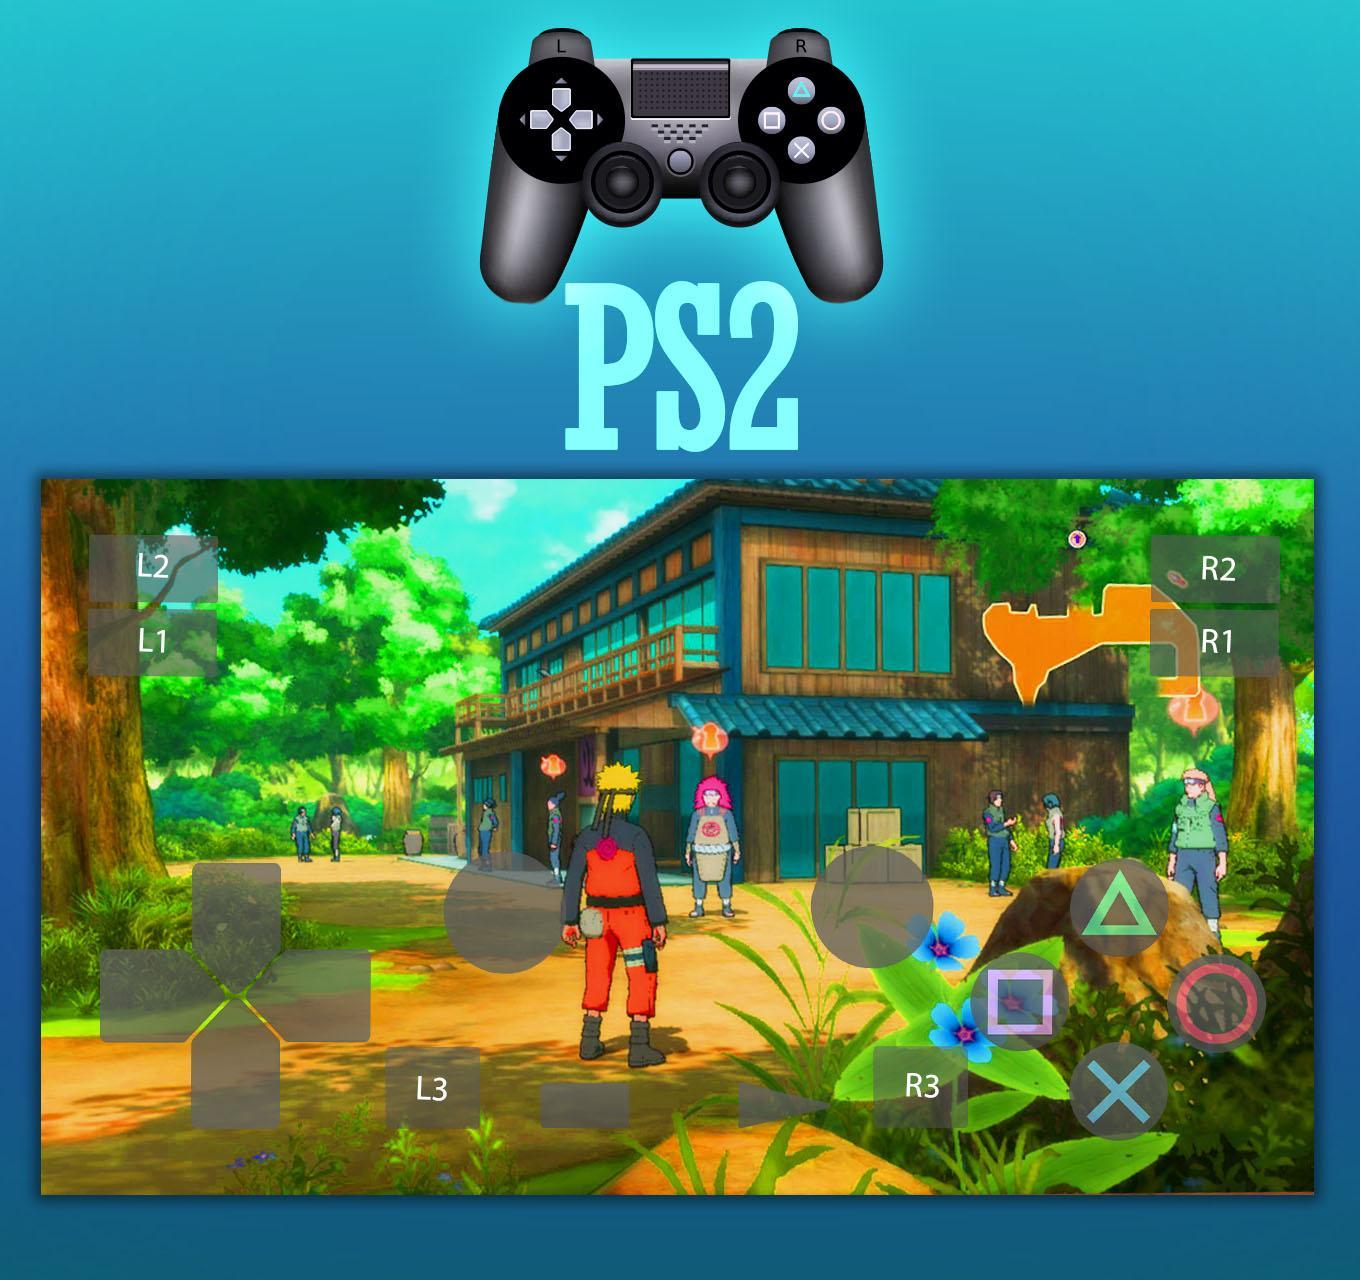 下载3D PS2 Emulator : Play Free 3D PS2 & PPSSPP Games的安卓版本